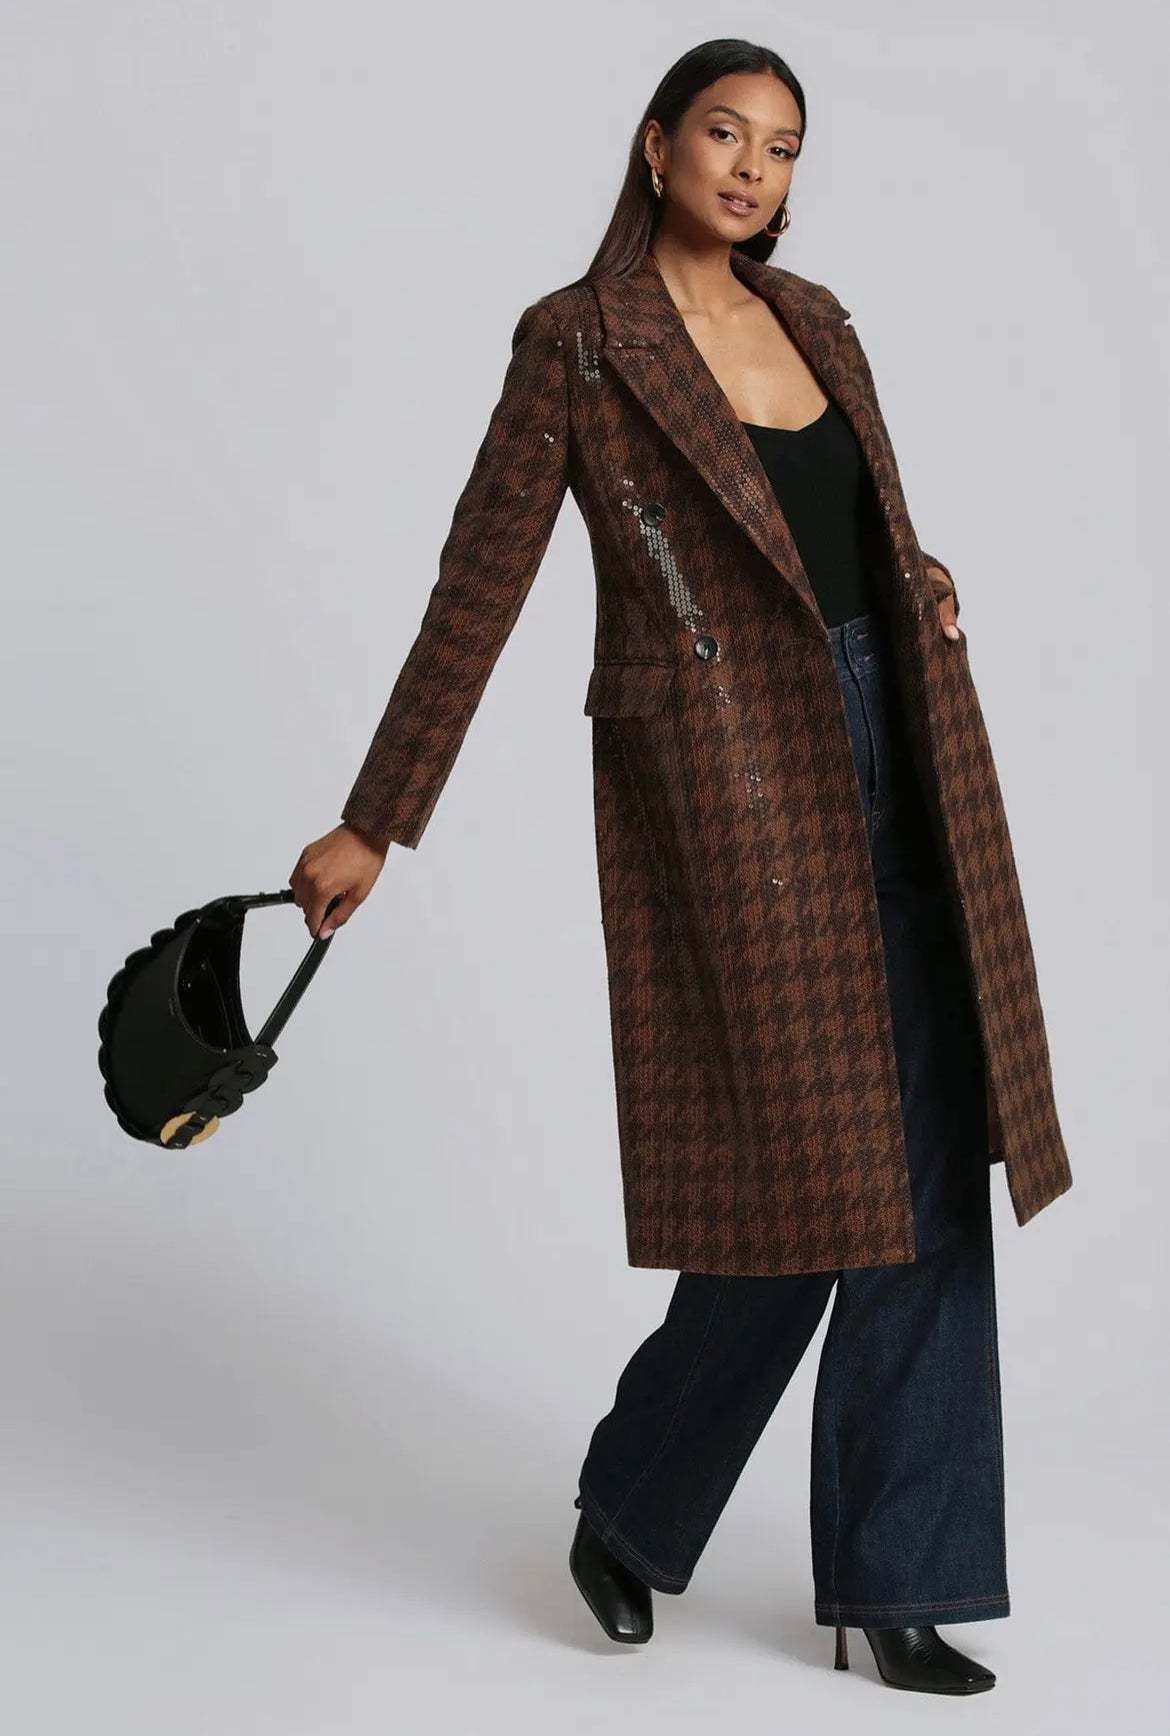 Sequin Houndstooth Tailored Coat